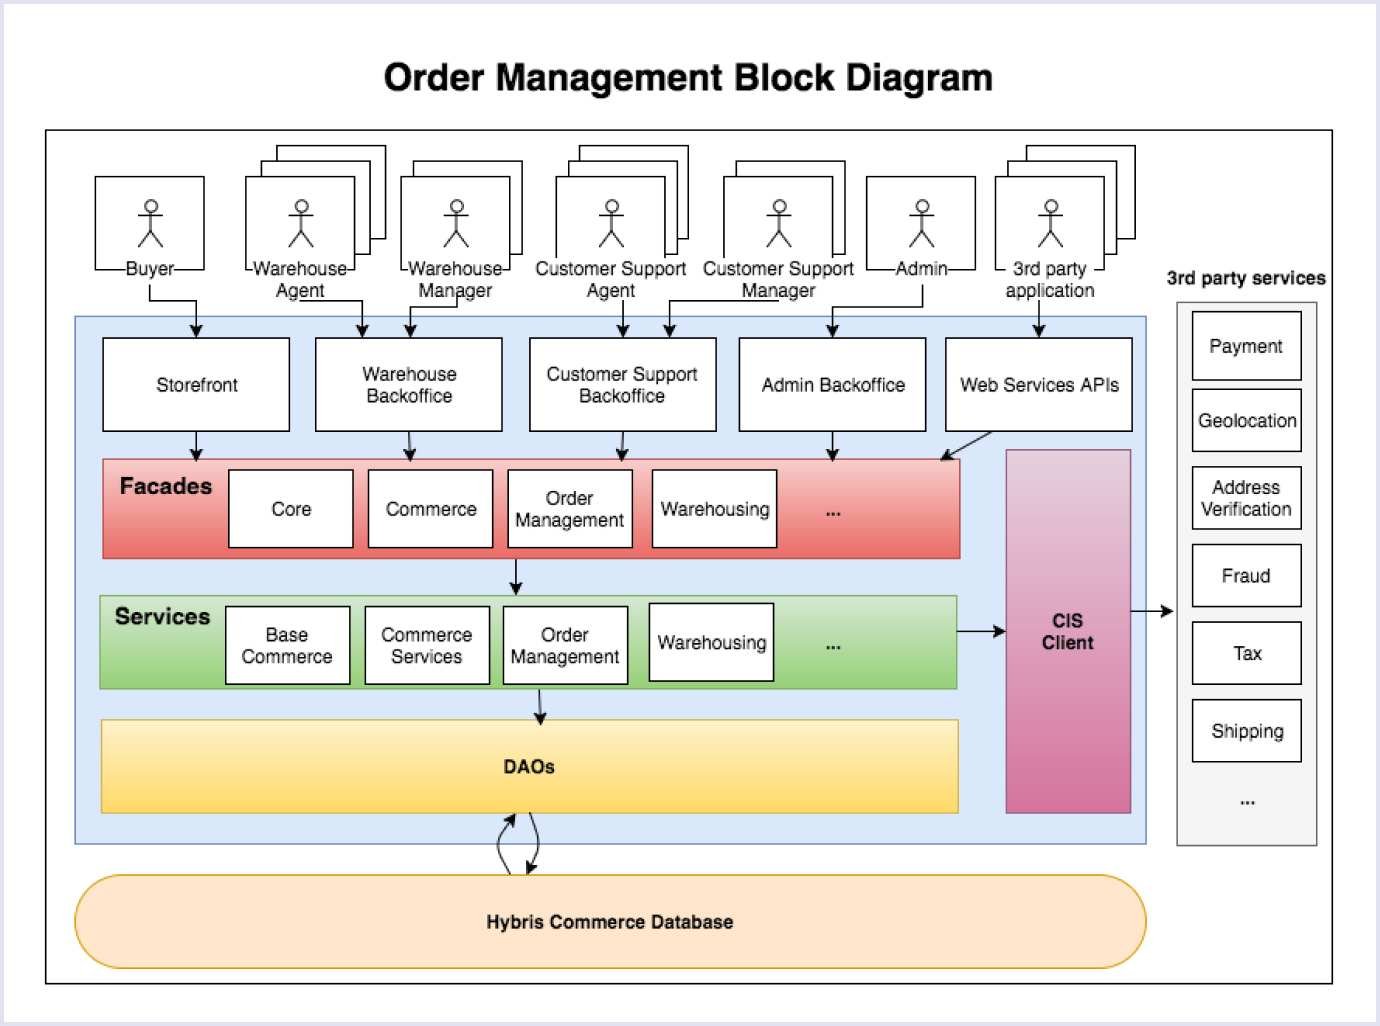 SAP order management diagram